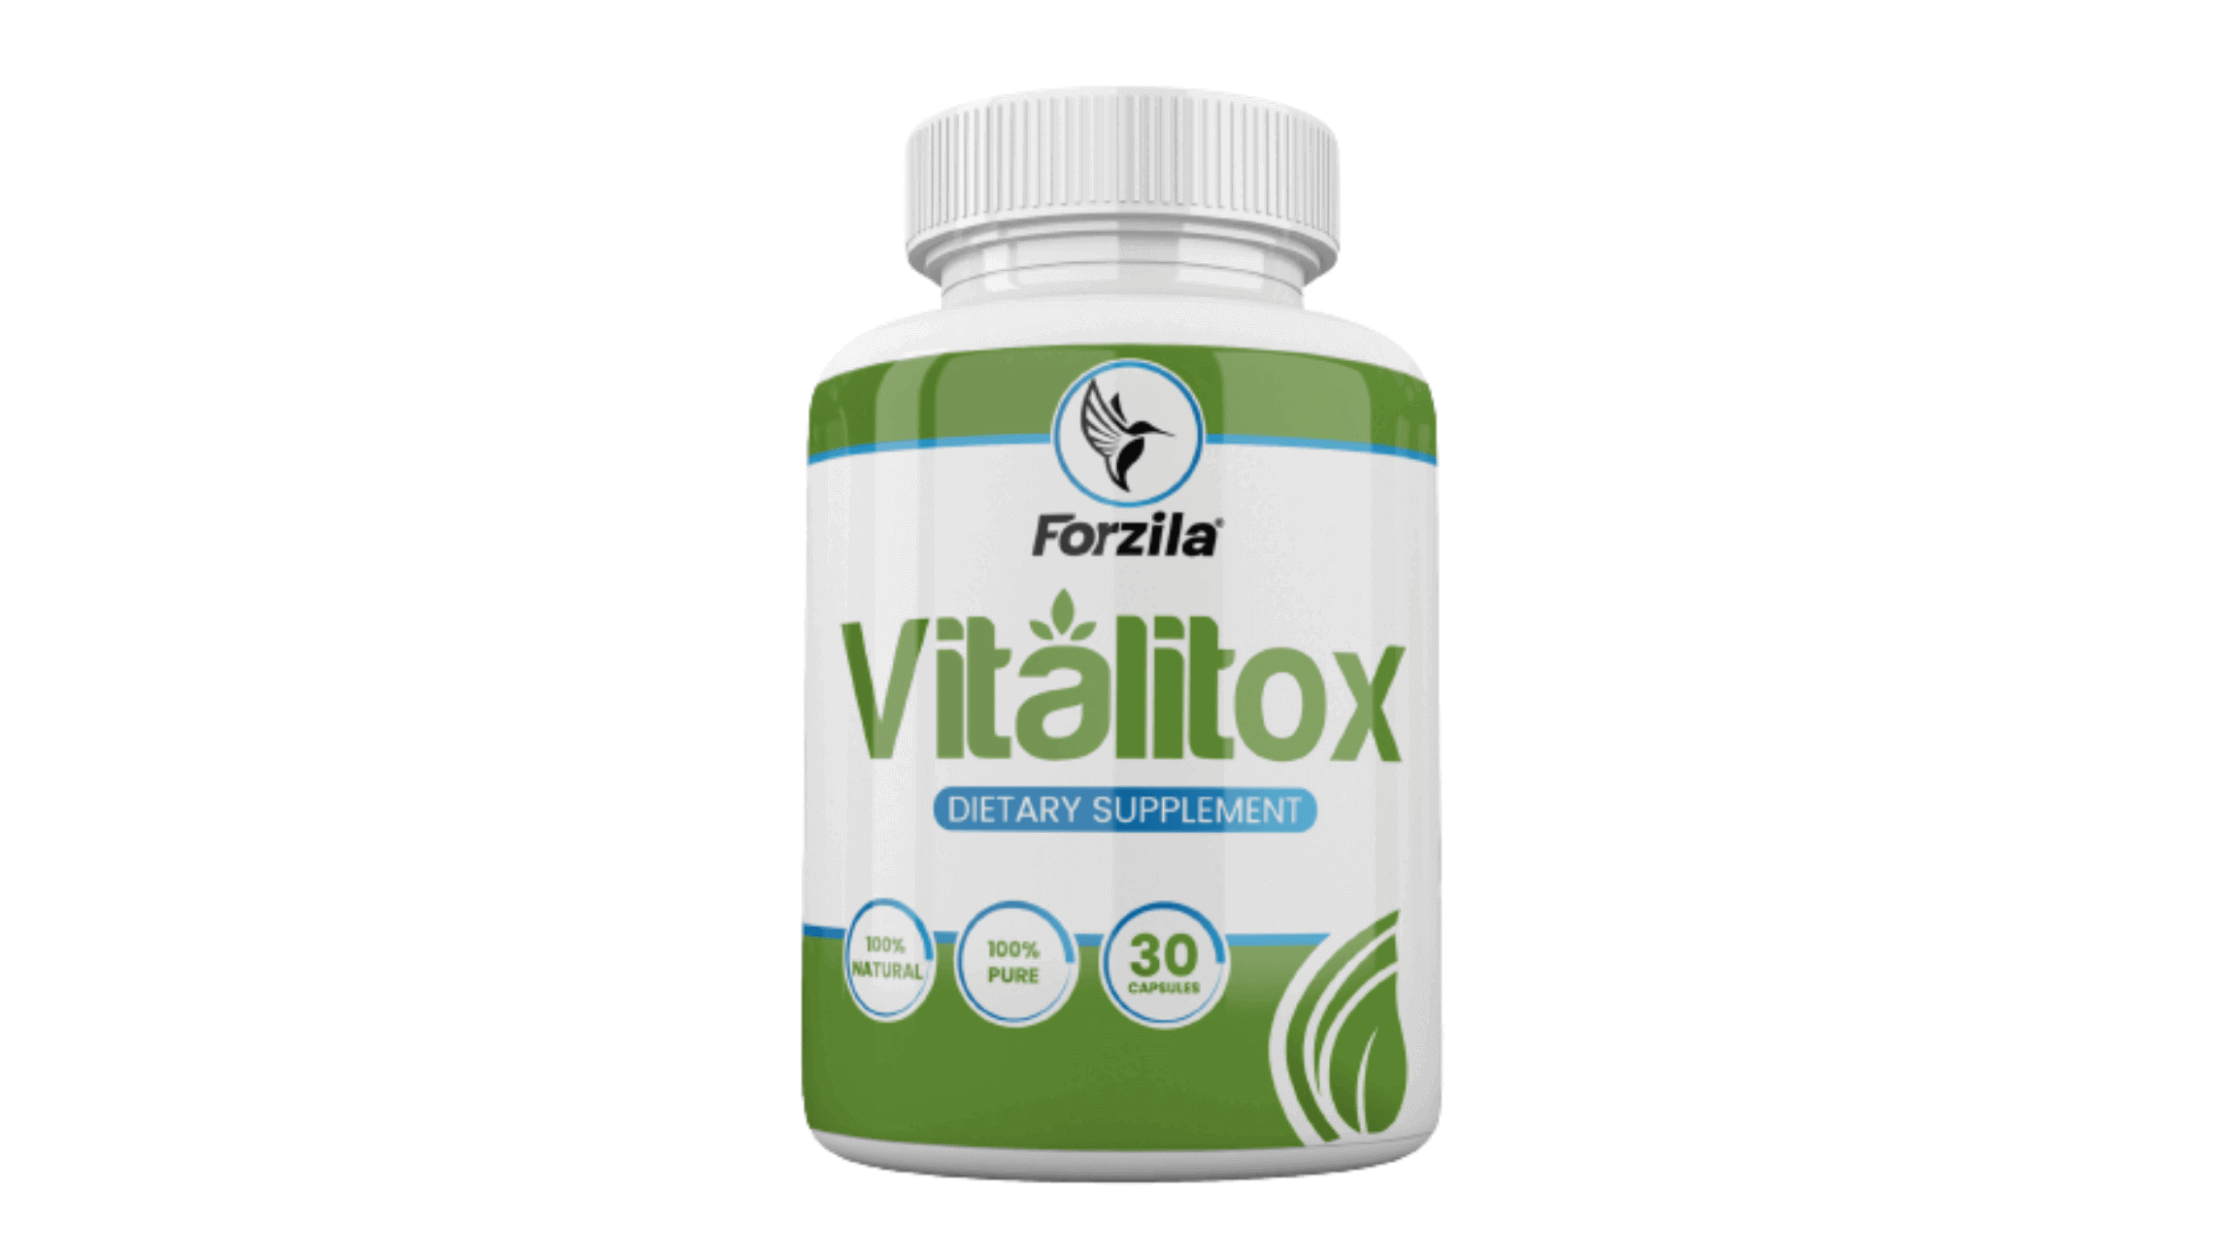 Vitalitox Reviews